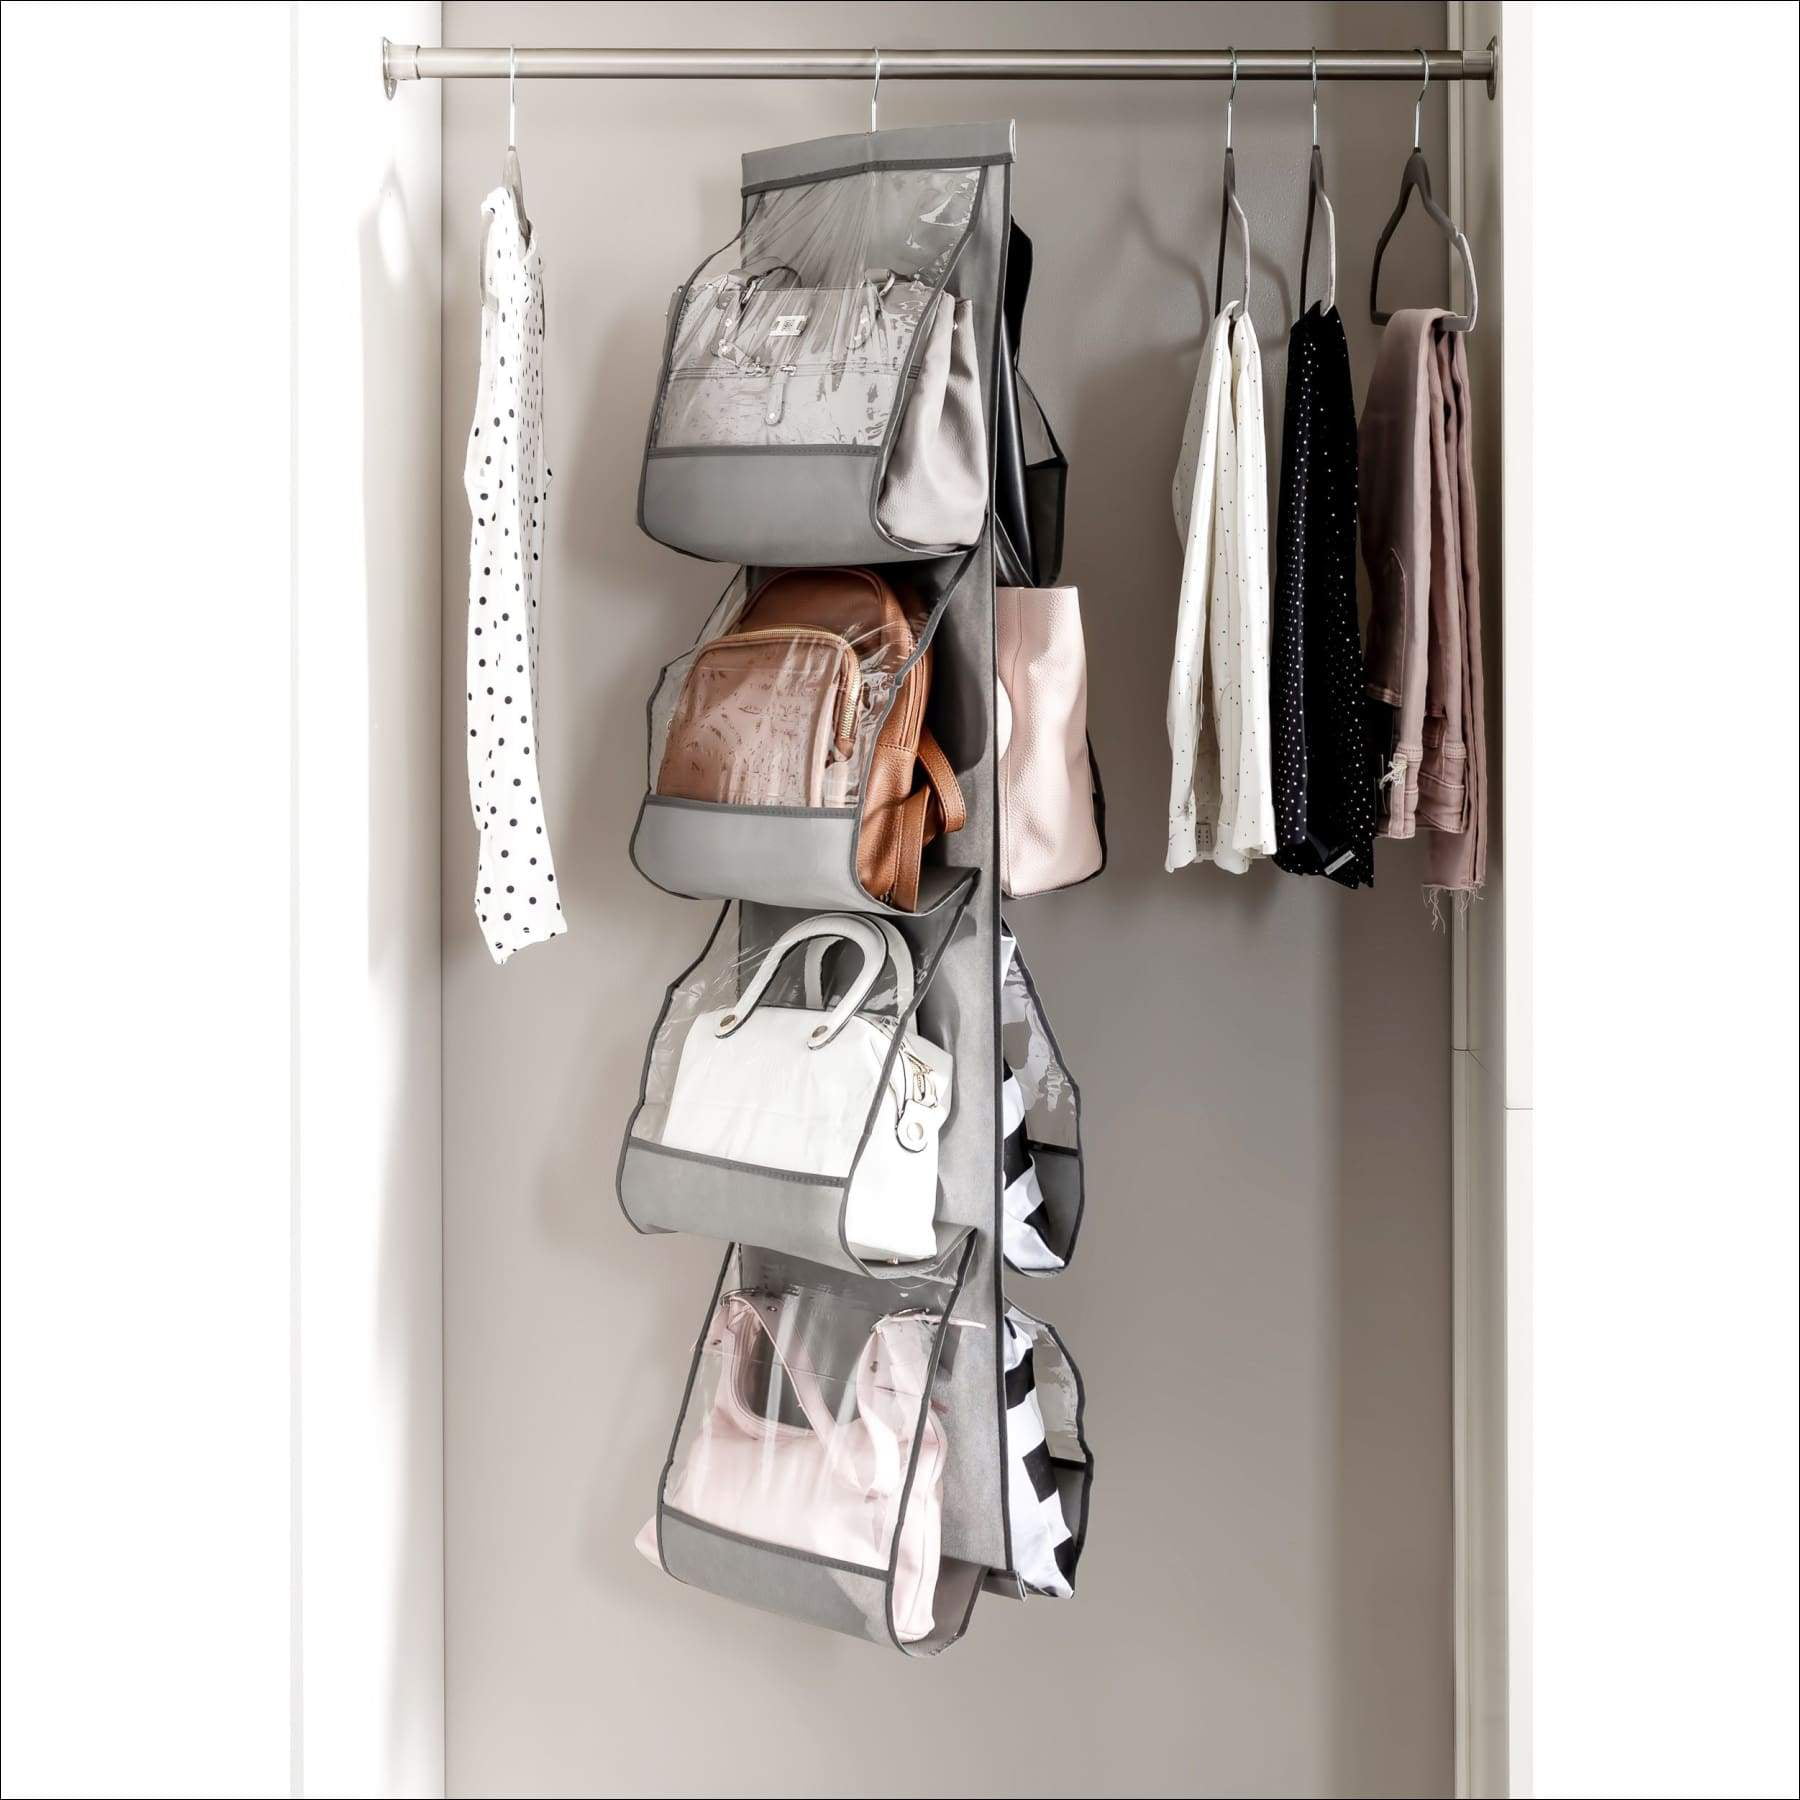 Wisdomcreate 8 Pockets Hanging Purse Handbag Organizer Clear Hanging Shelf Bag Collection Storage